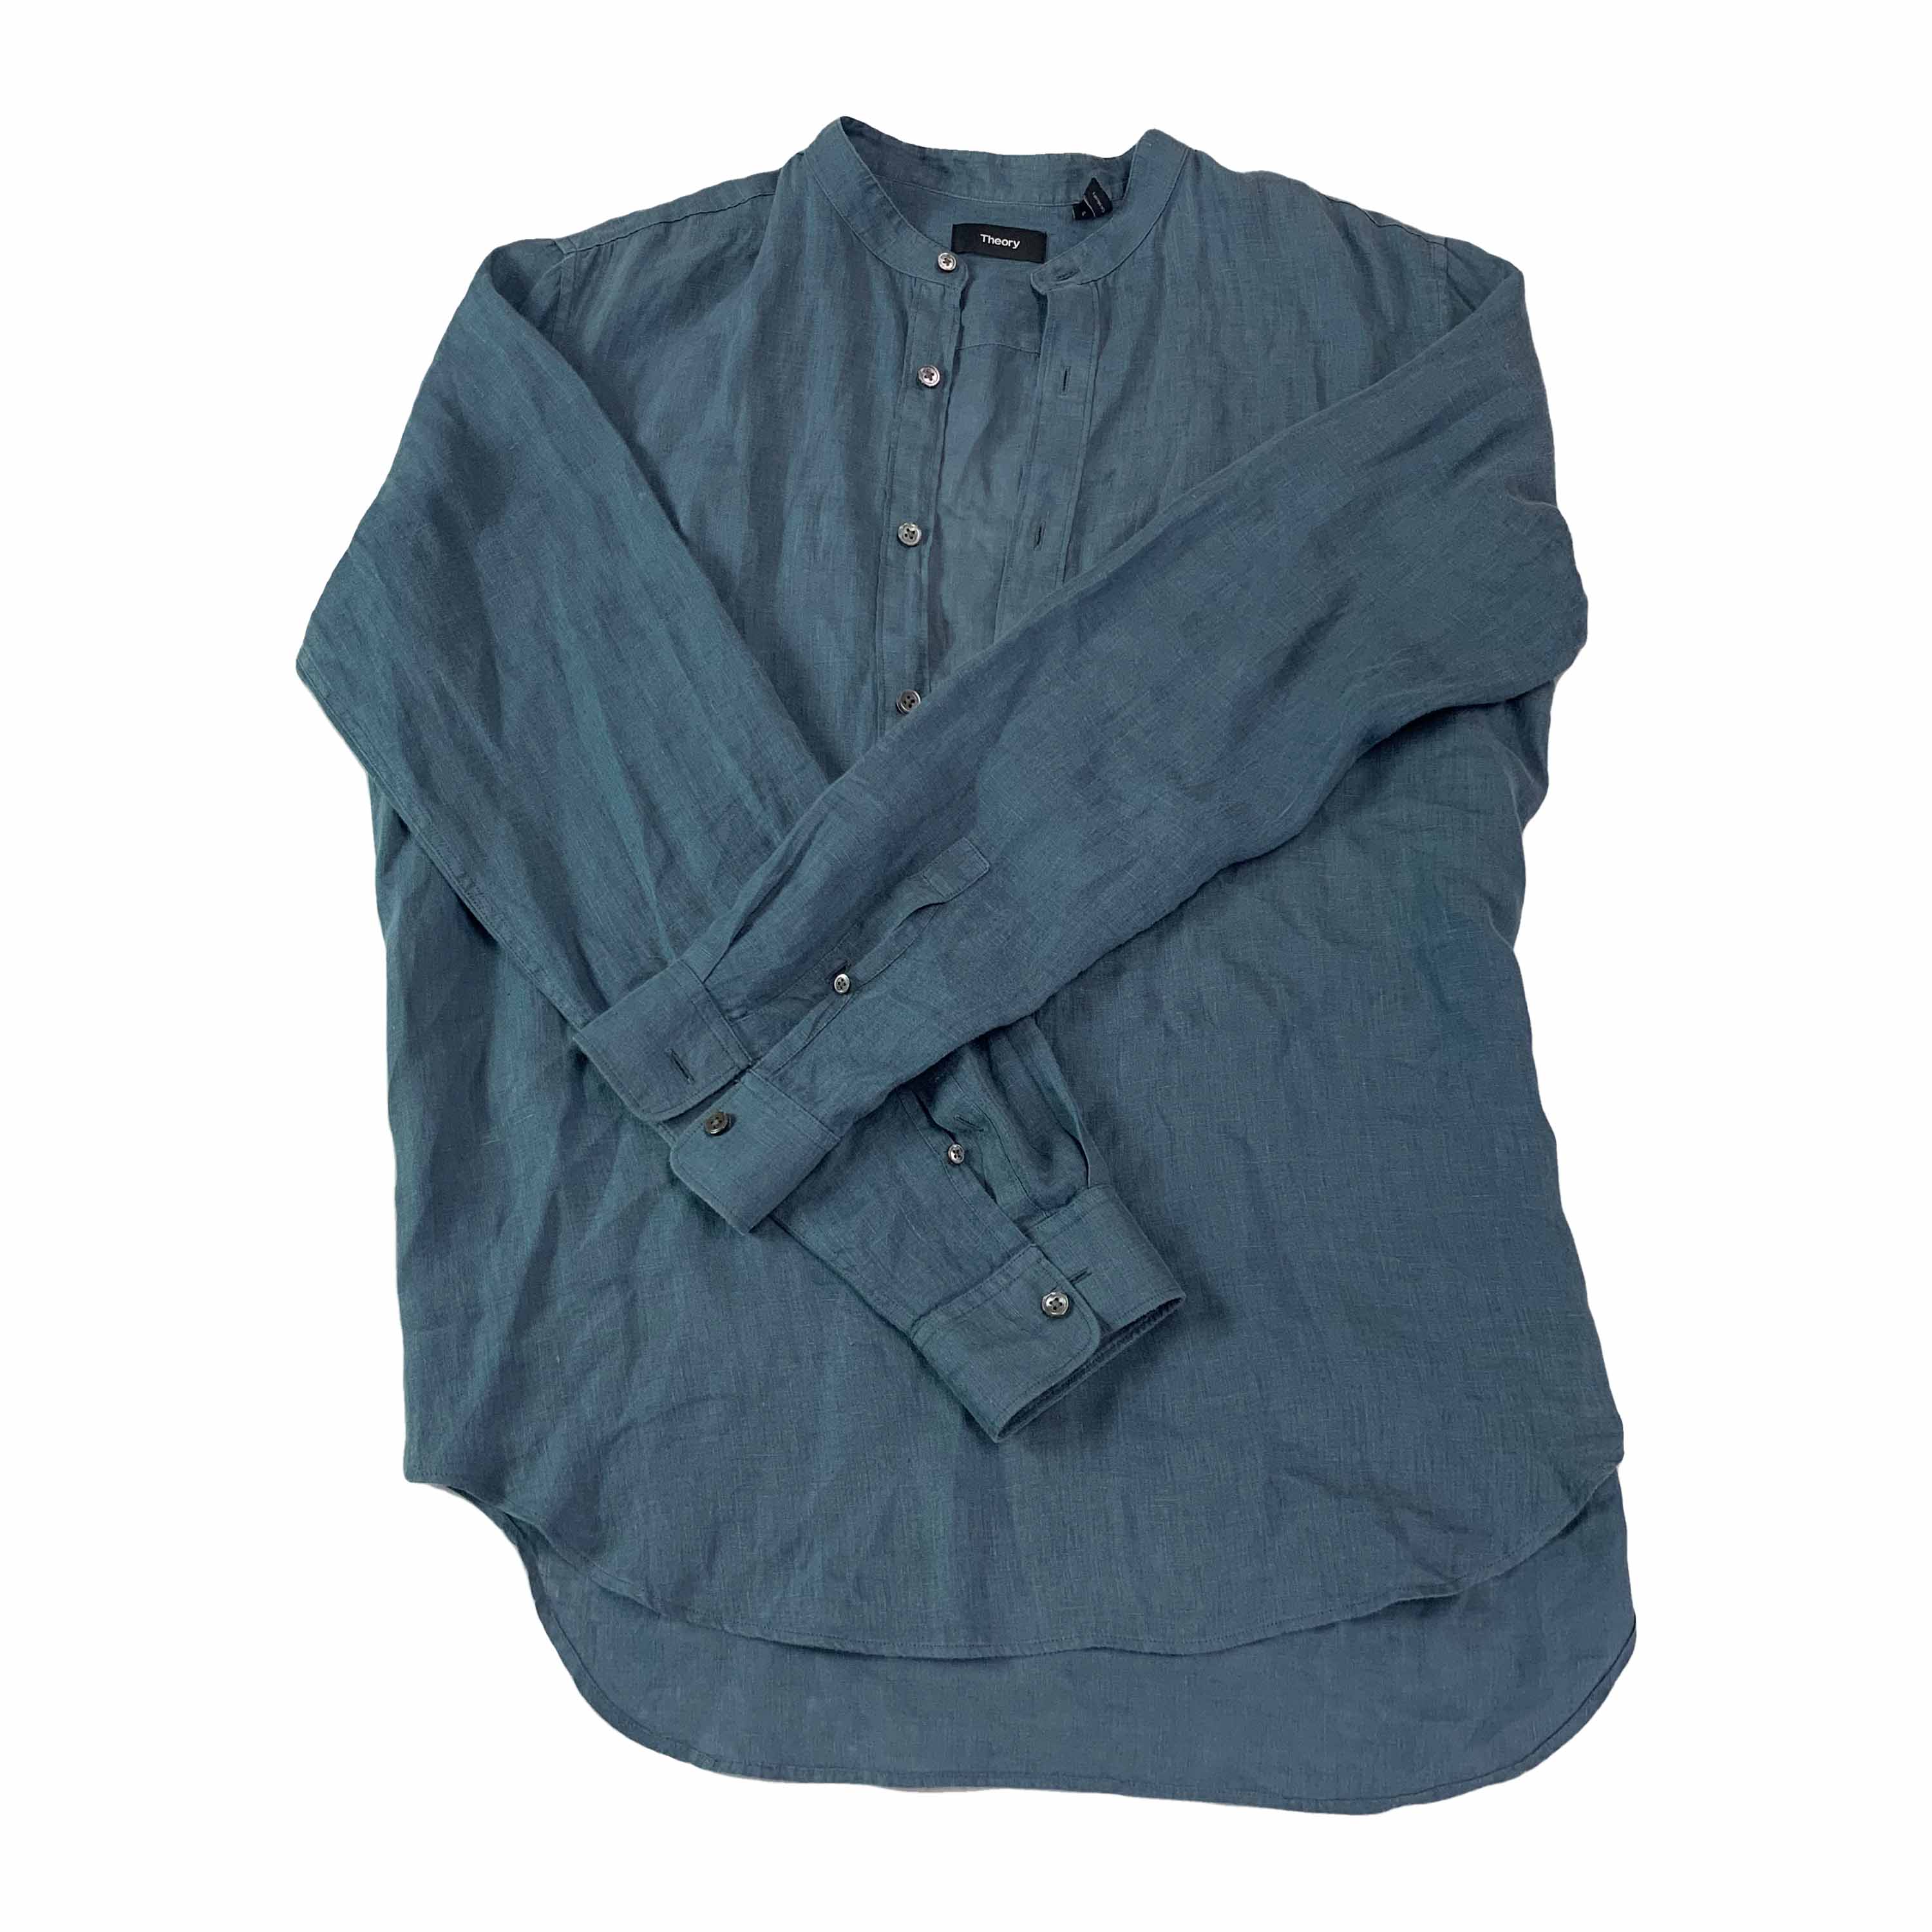 [Theory] Dark Blue Button-up Shirt - Size S